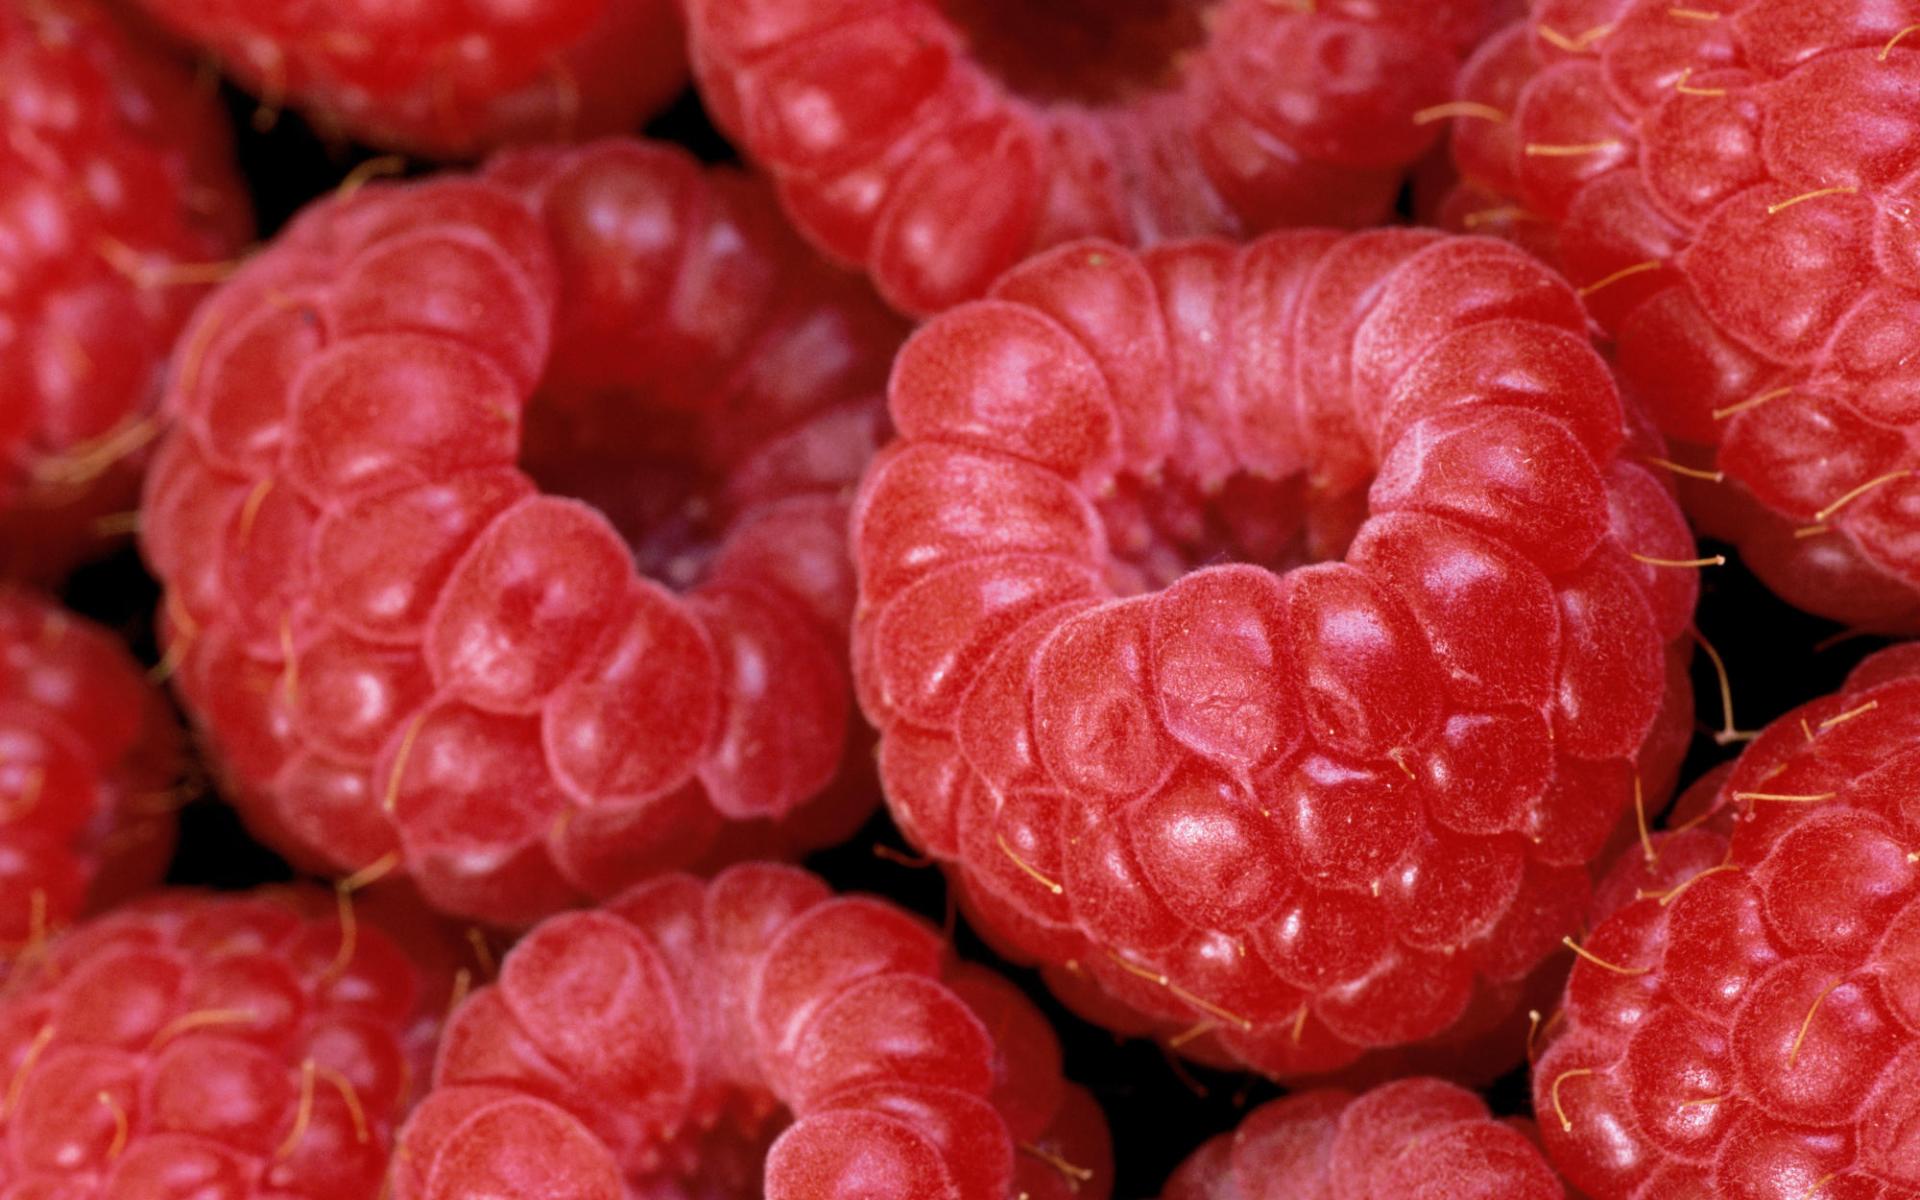 View and Download Raspberries wallpaper Raspberries wallpaper